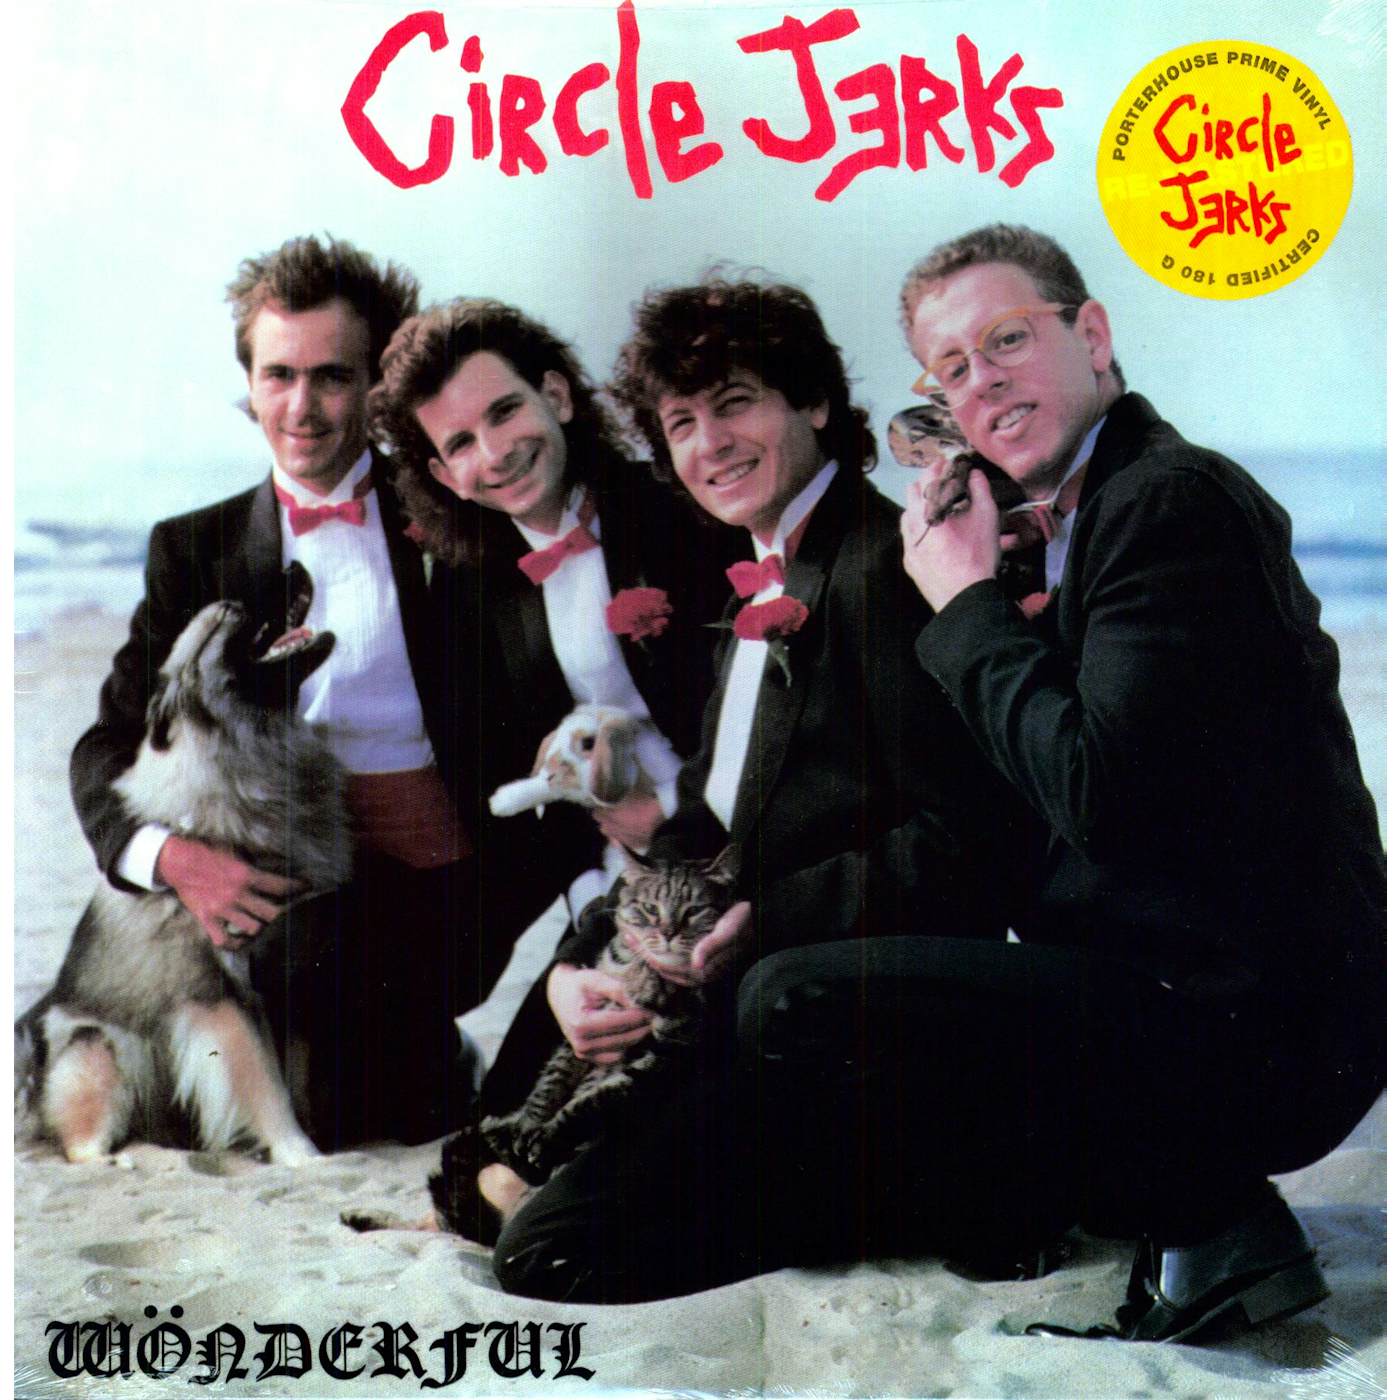 Circle Jerks Wonderful Vinyl Record